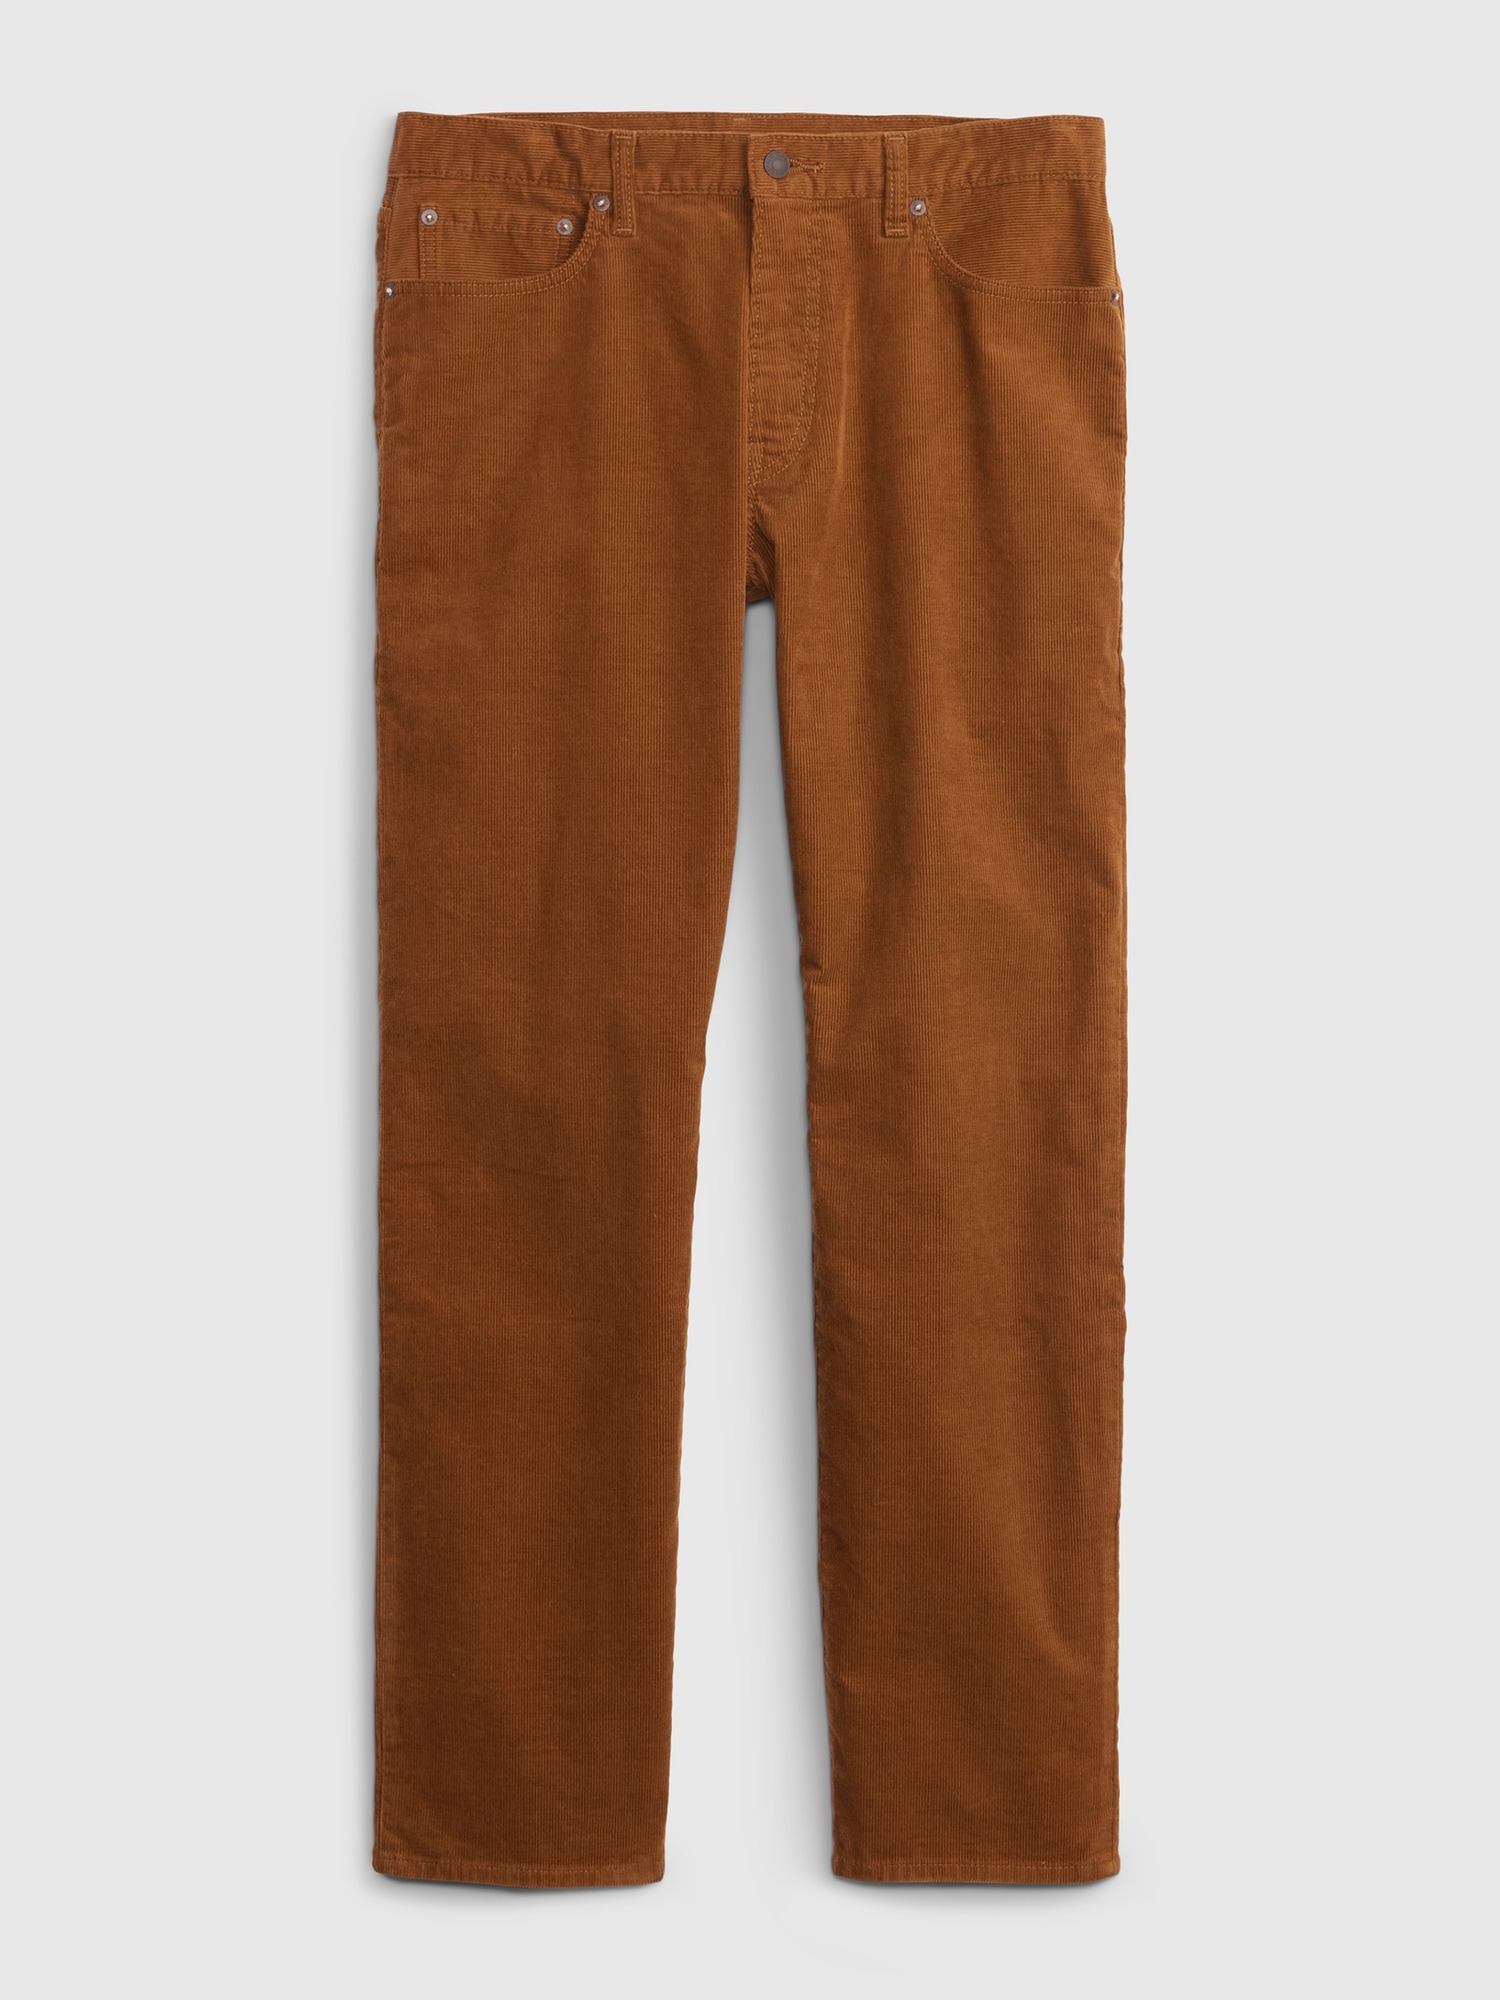 Straight | Gap Original Corduroy 90s Pants Fit